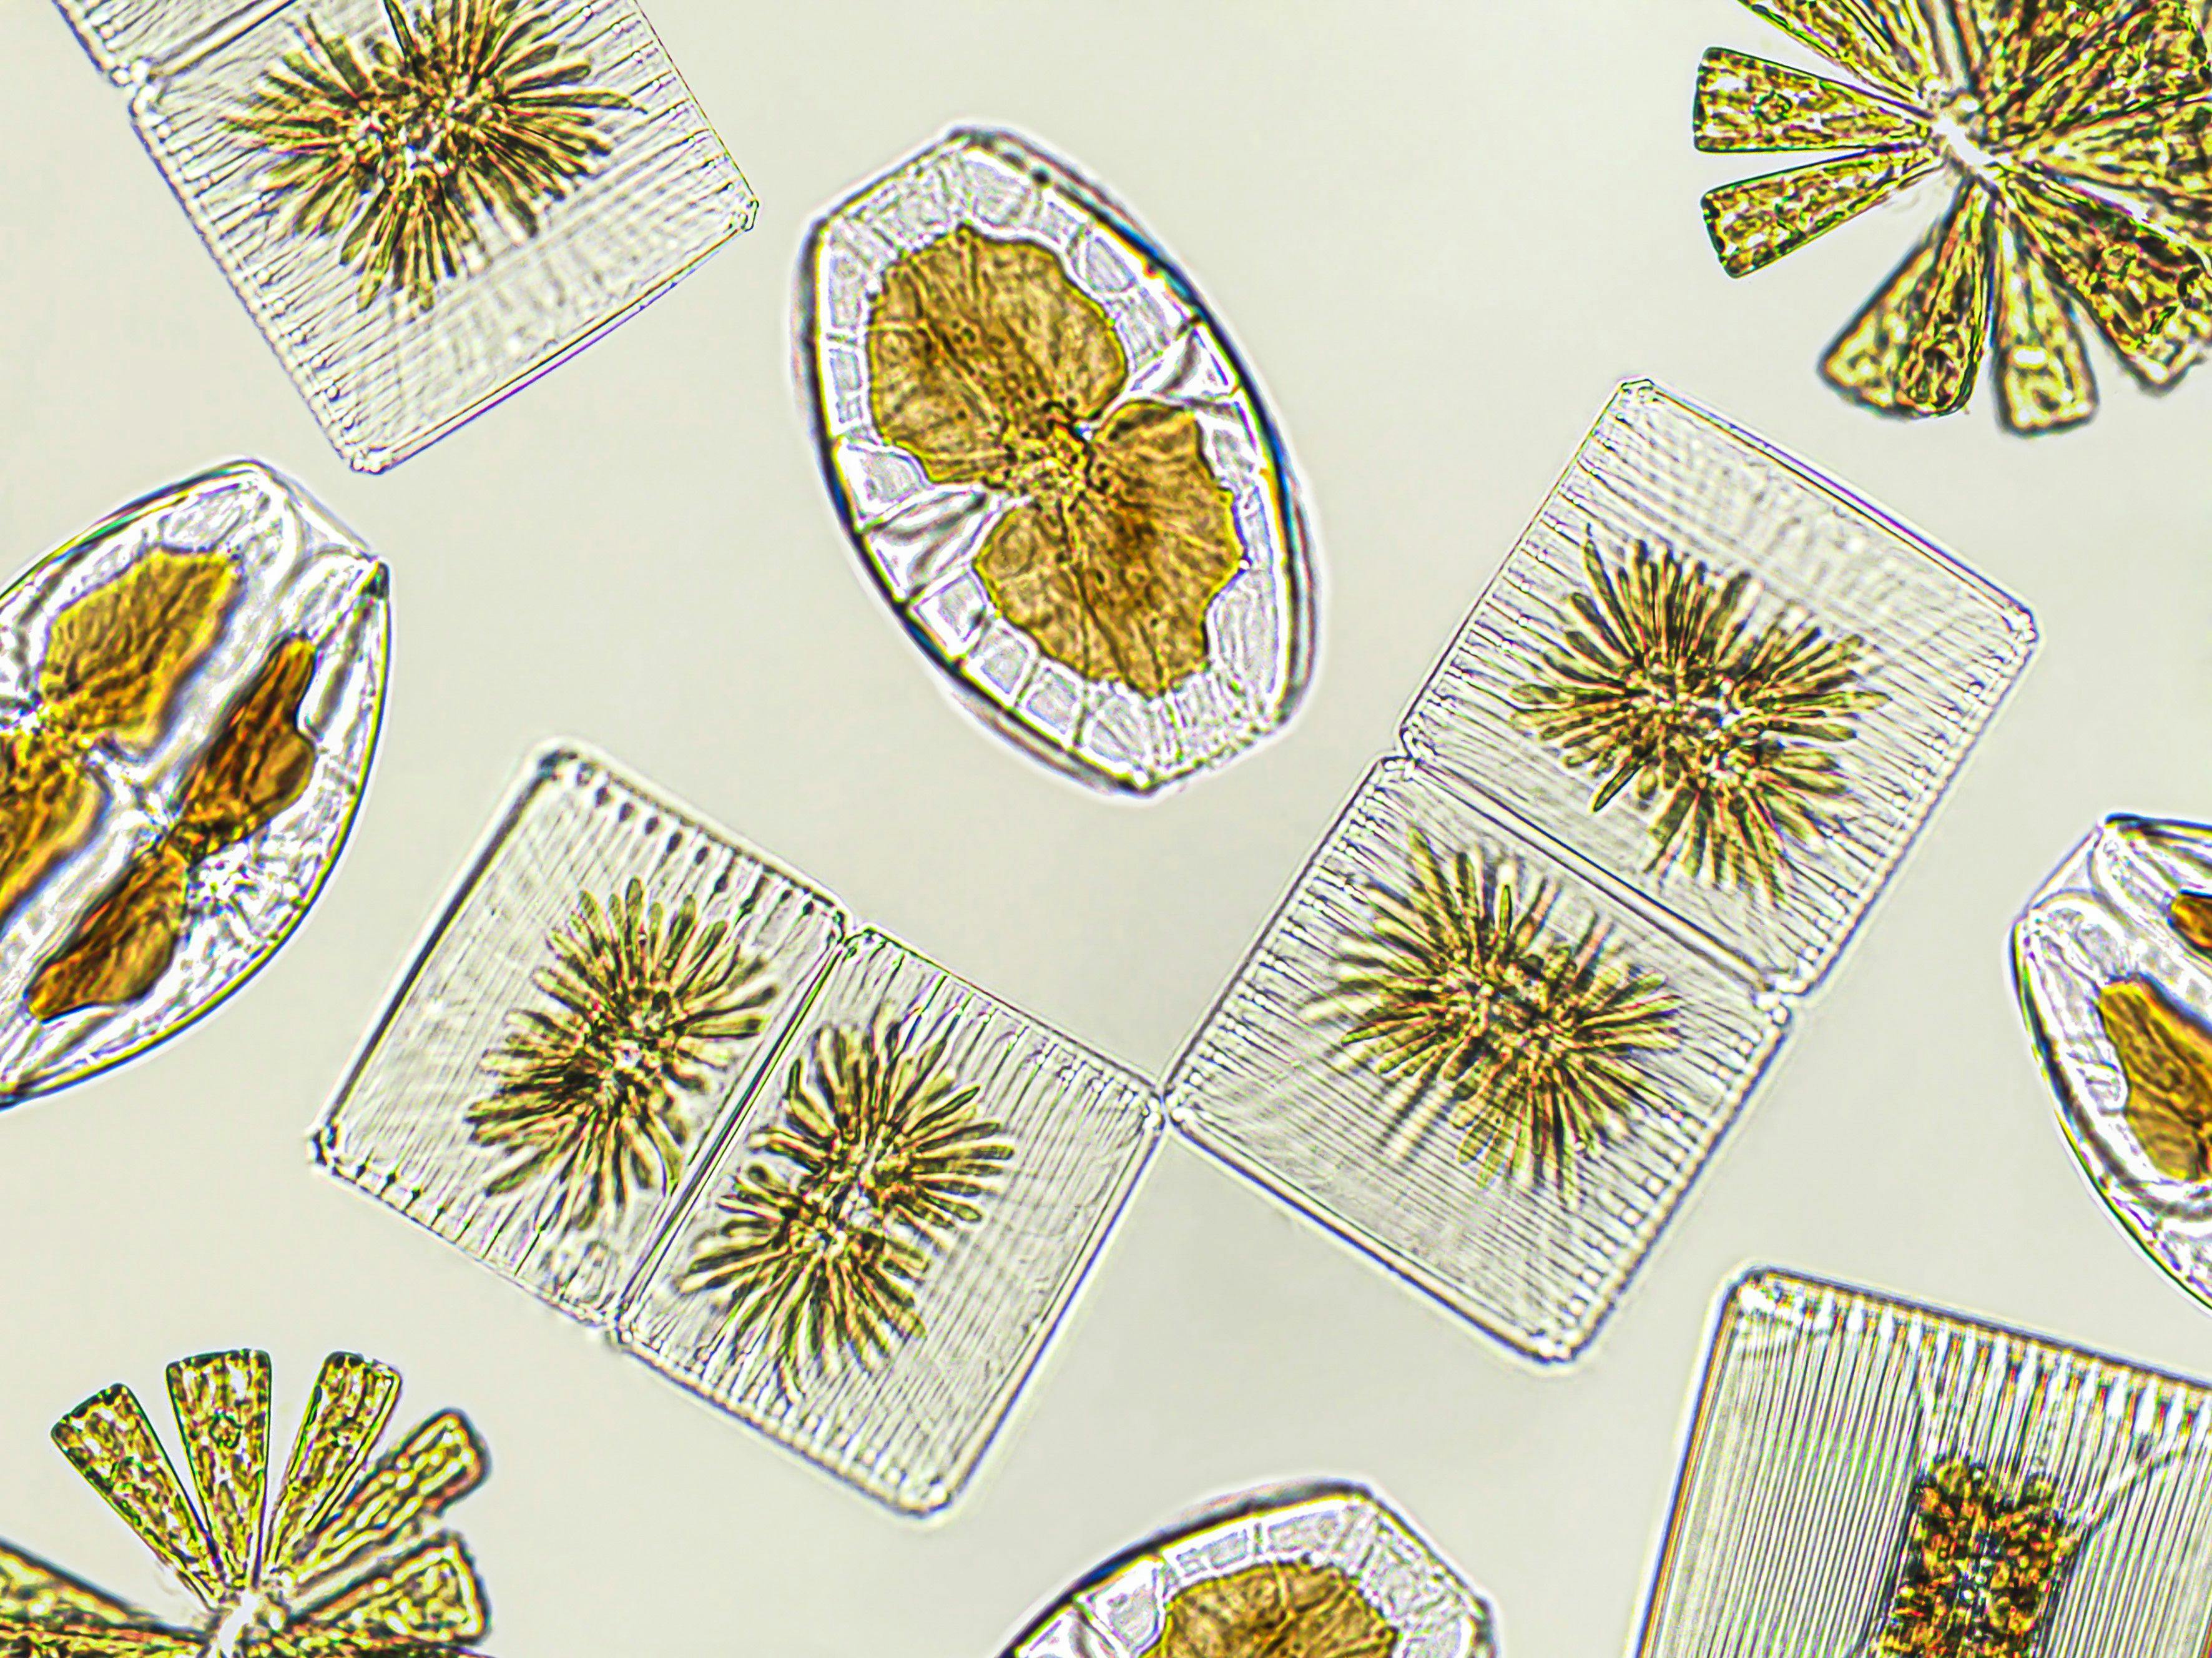 Diatoms, algae under microscopic view, phytoplankton, fossils, silica, golden yellow algae | Image Credit: © elif - stock.adobe.com